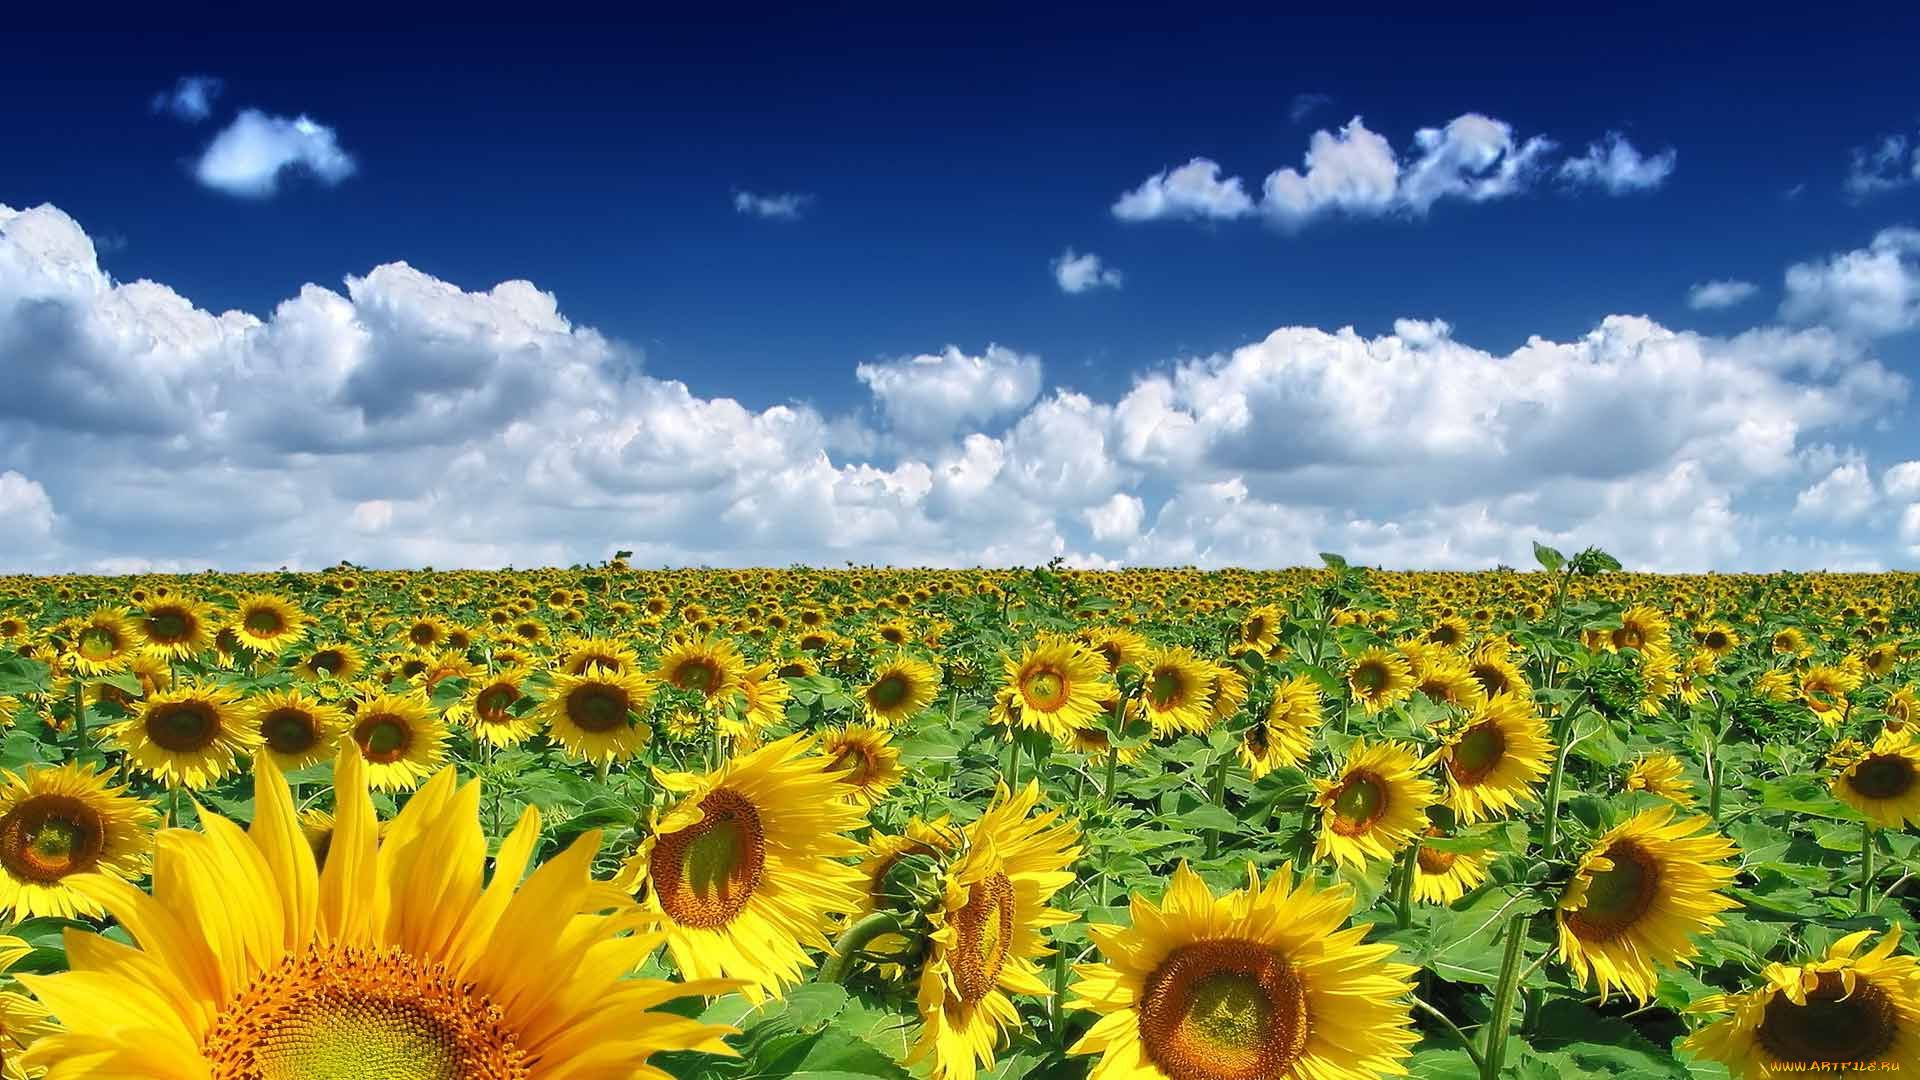 Sunflower Field free wallpaper for desktop